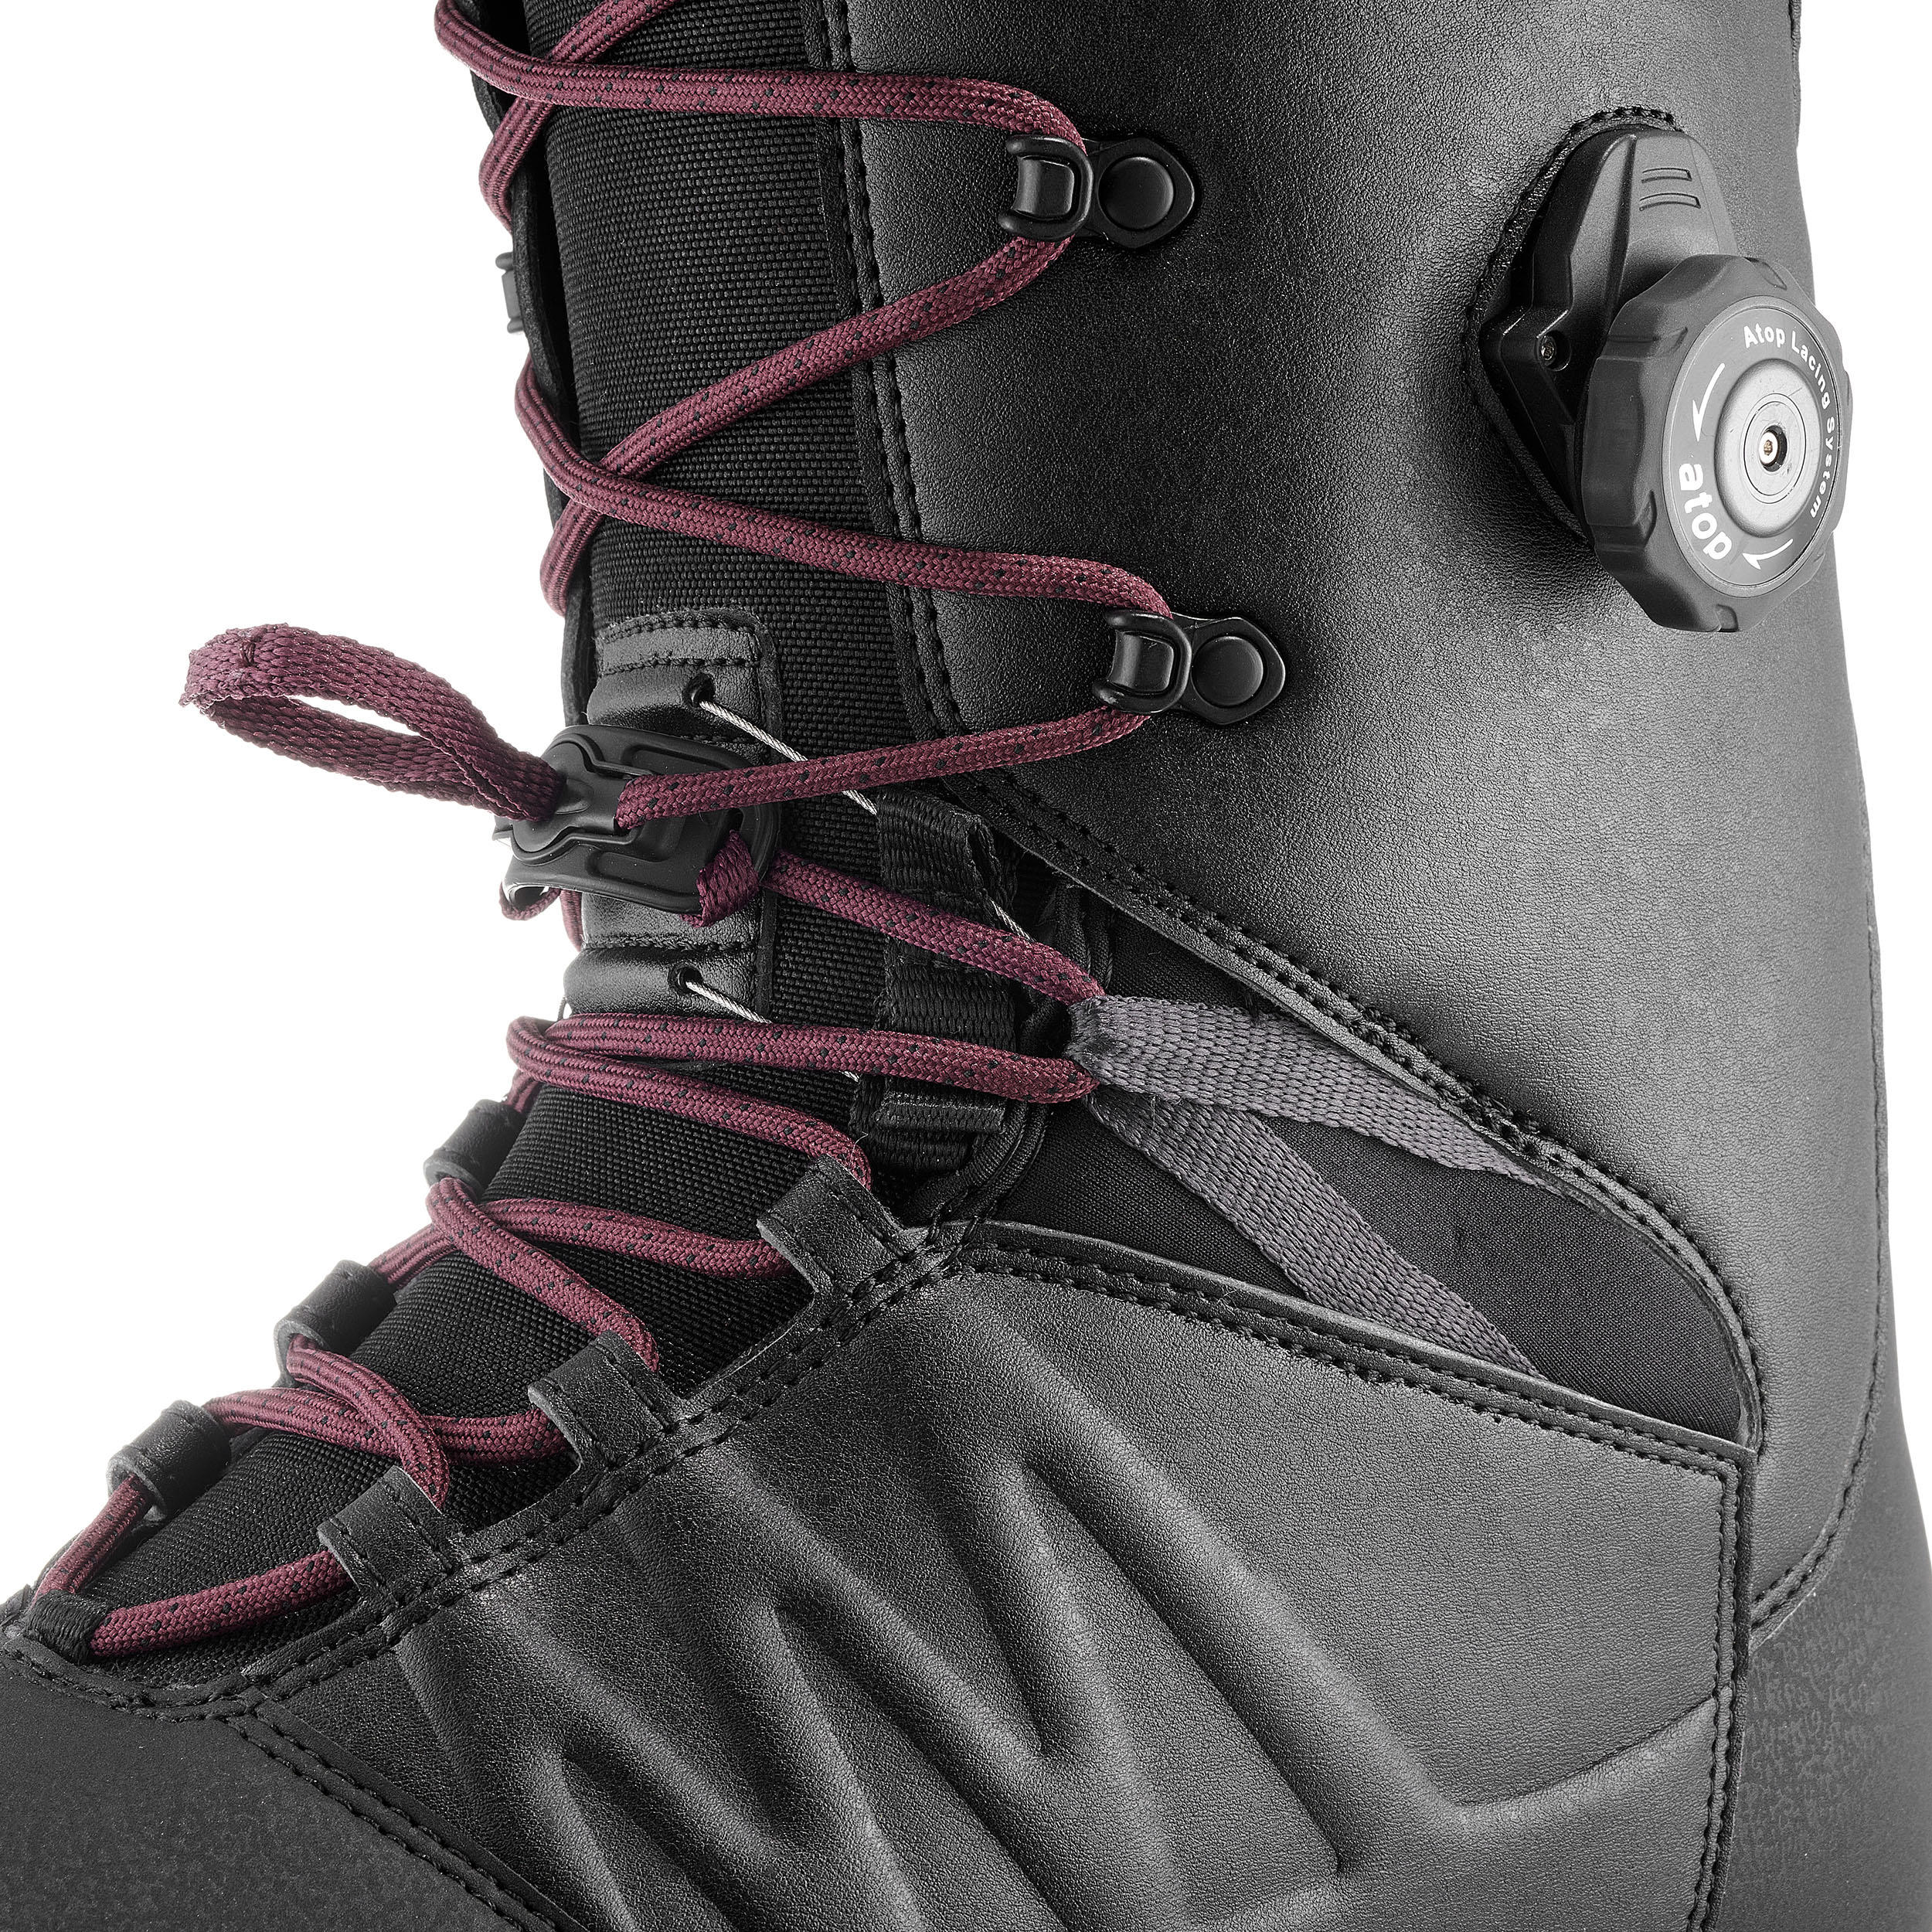 Men's Snowboard Boots FS/AM, Endzone Black 13/14